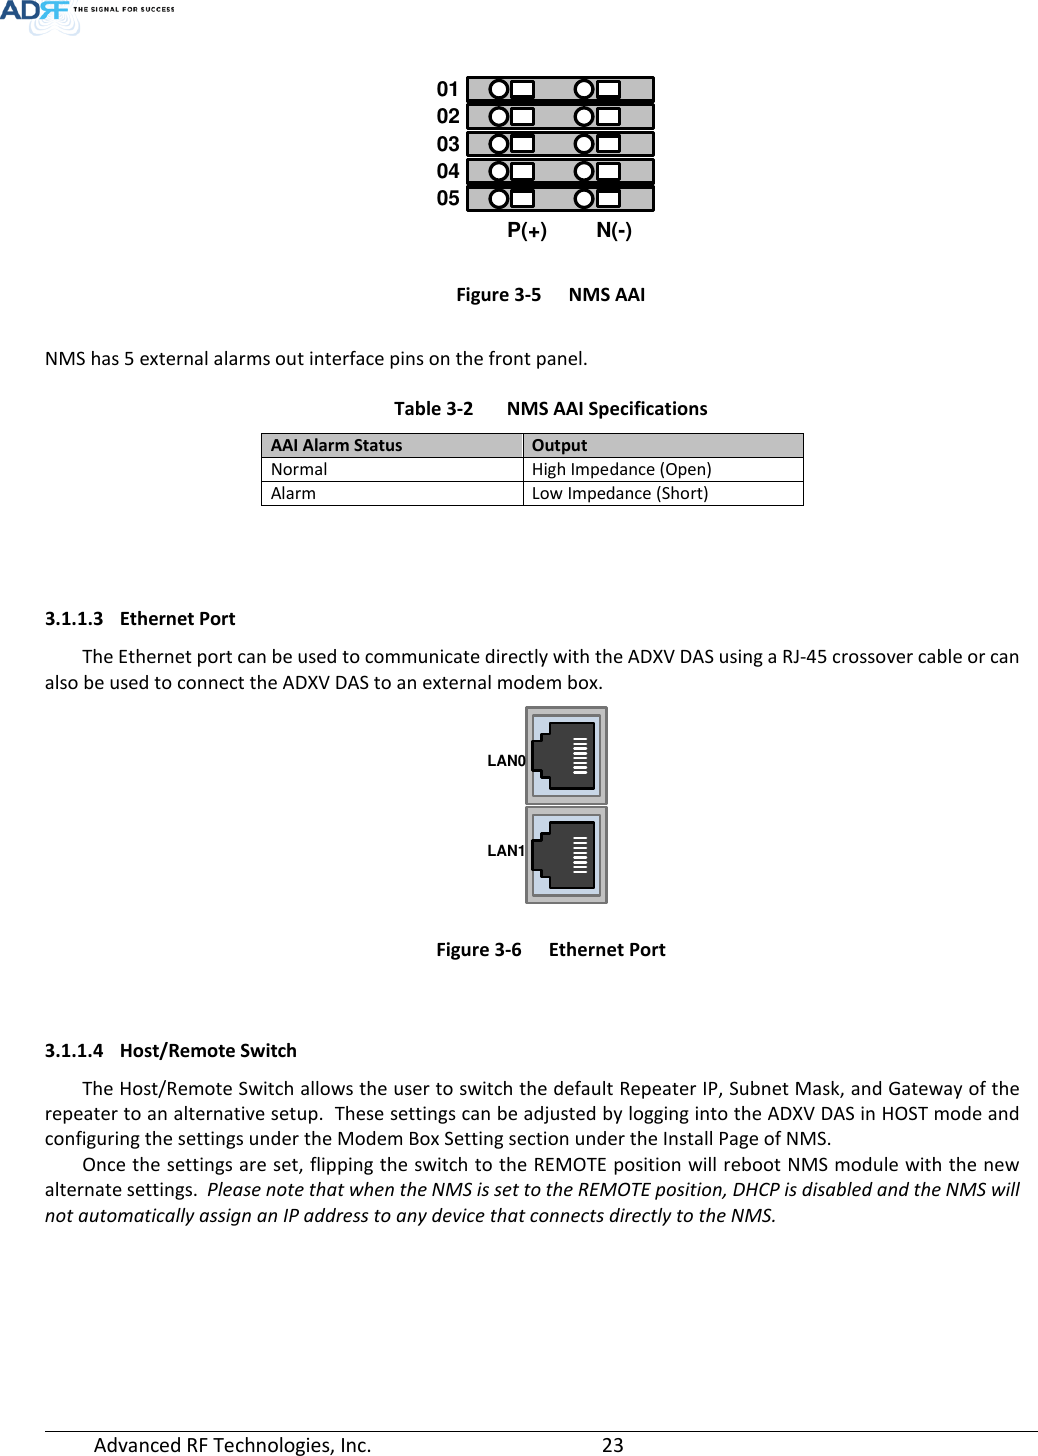 Page 23 of ADRF KOREA ADXV-R-37W DAS (Distributed Antenna System) User Manual ADXV DAS